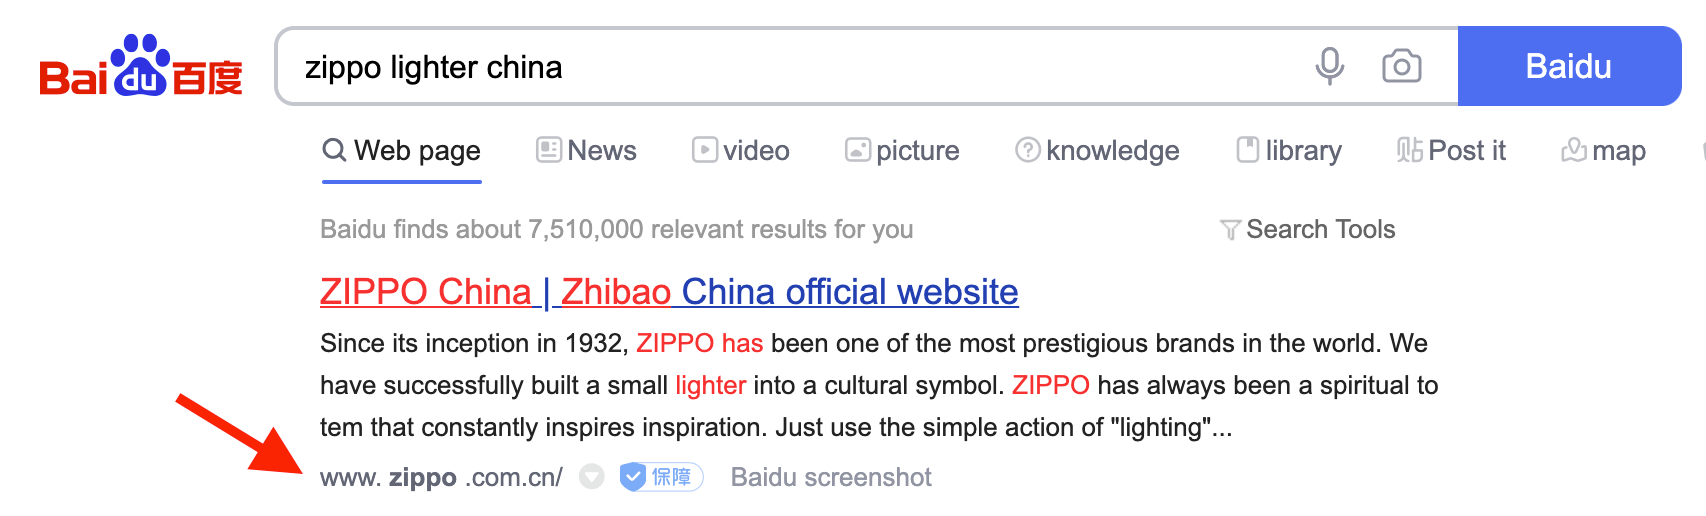 SEO Improvement: #1 on Baidu Search Results